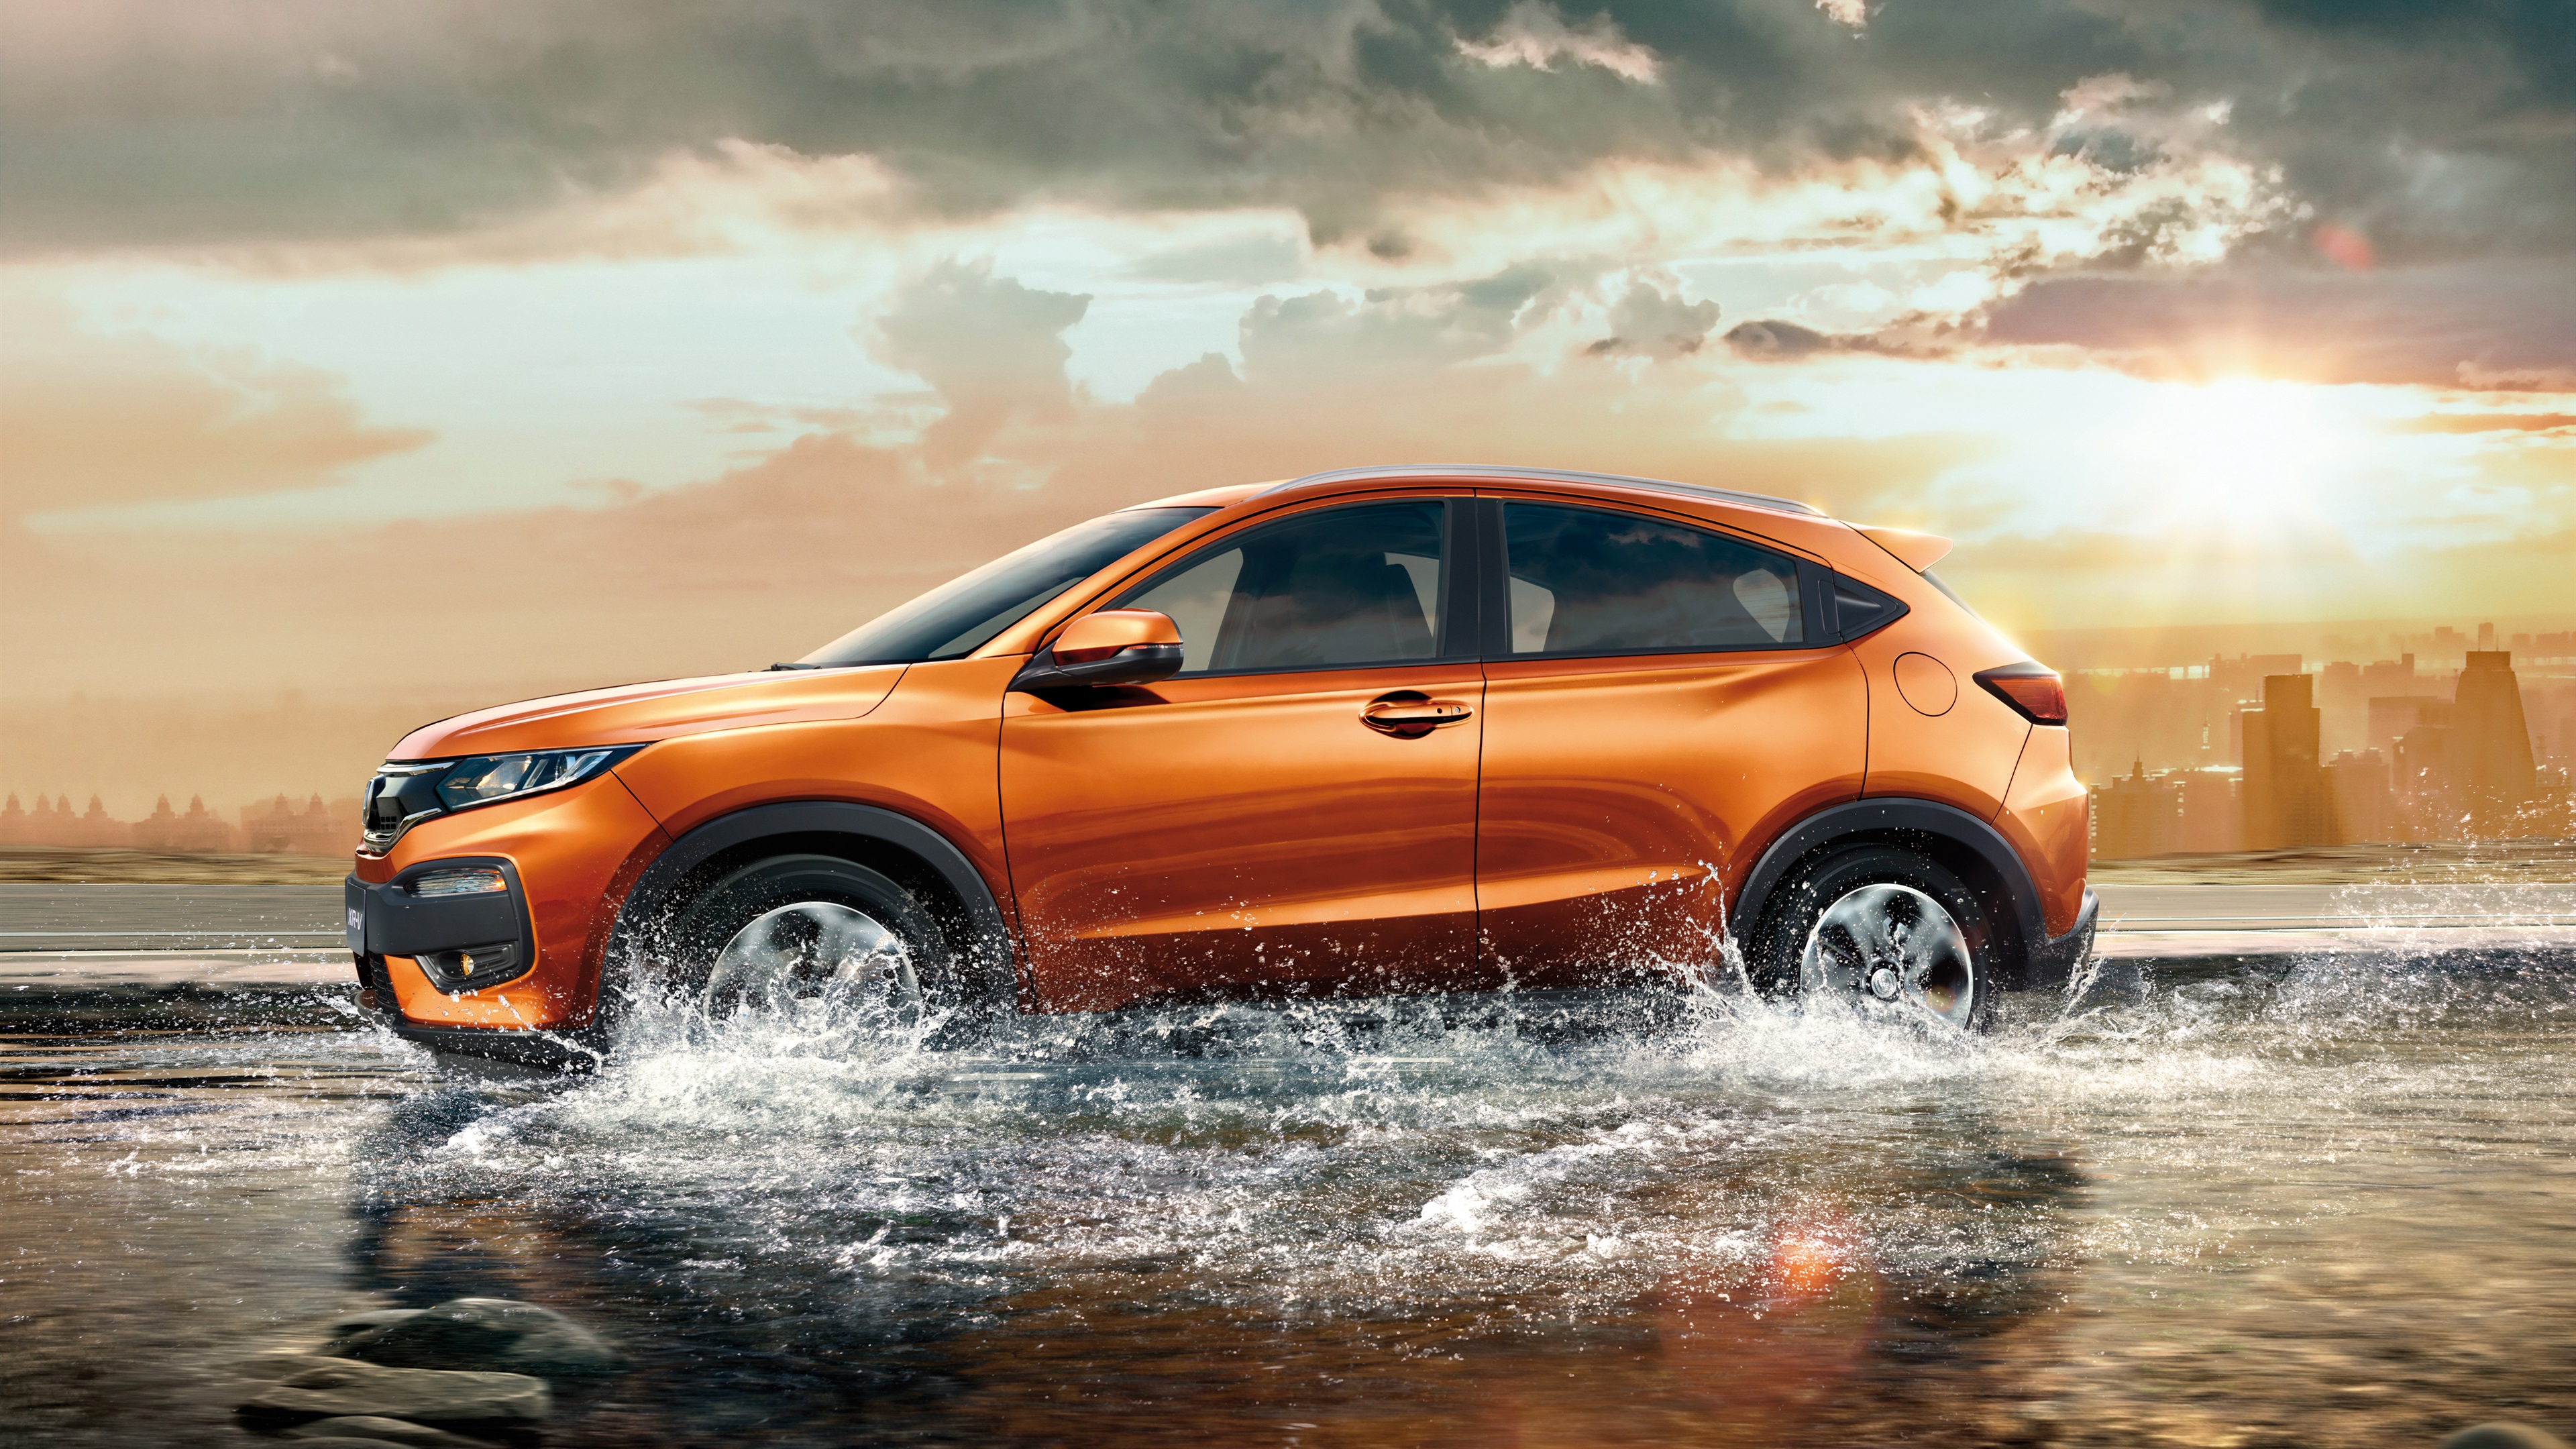 Wallpaper Honda Xr V Orange Suv Car In Water UHD 4k